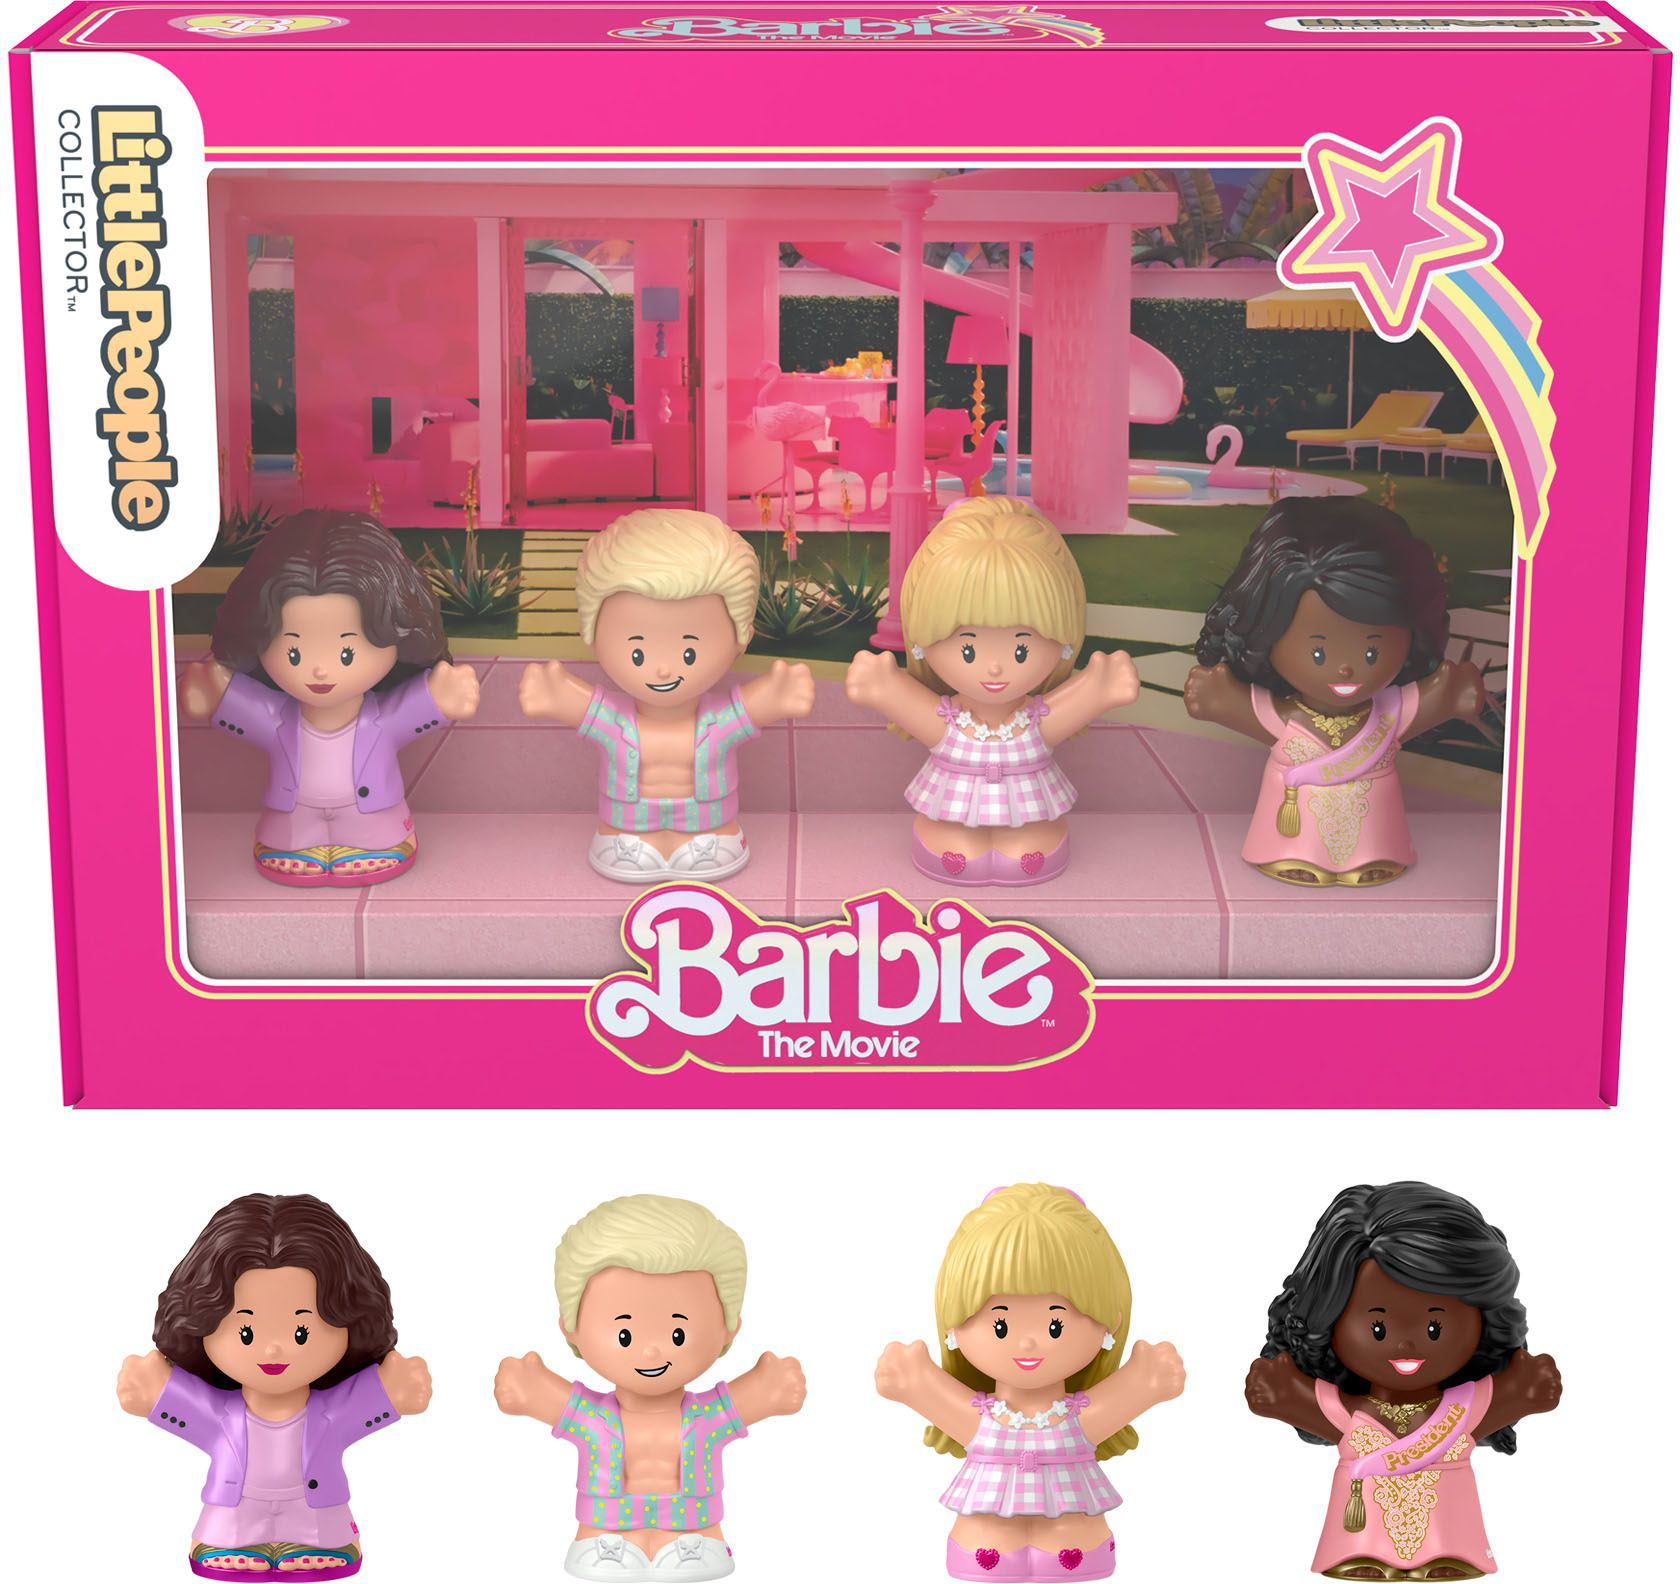 Little People Collector Barbie The Movie Figures HRK97 - Best Buy | Best Buy U.S.